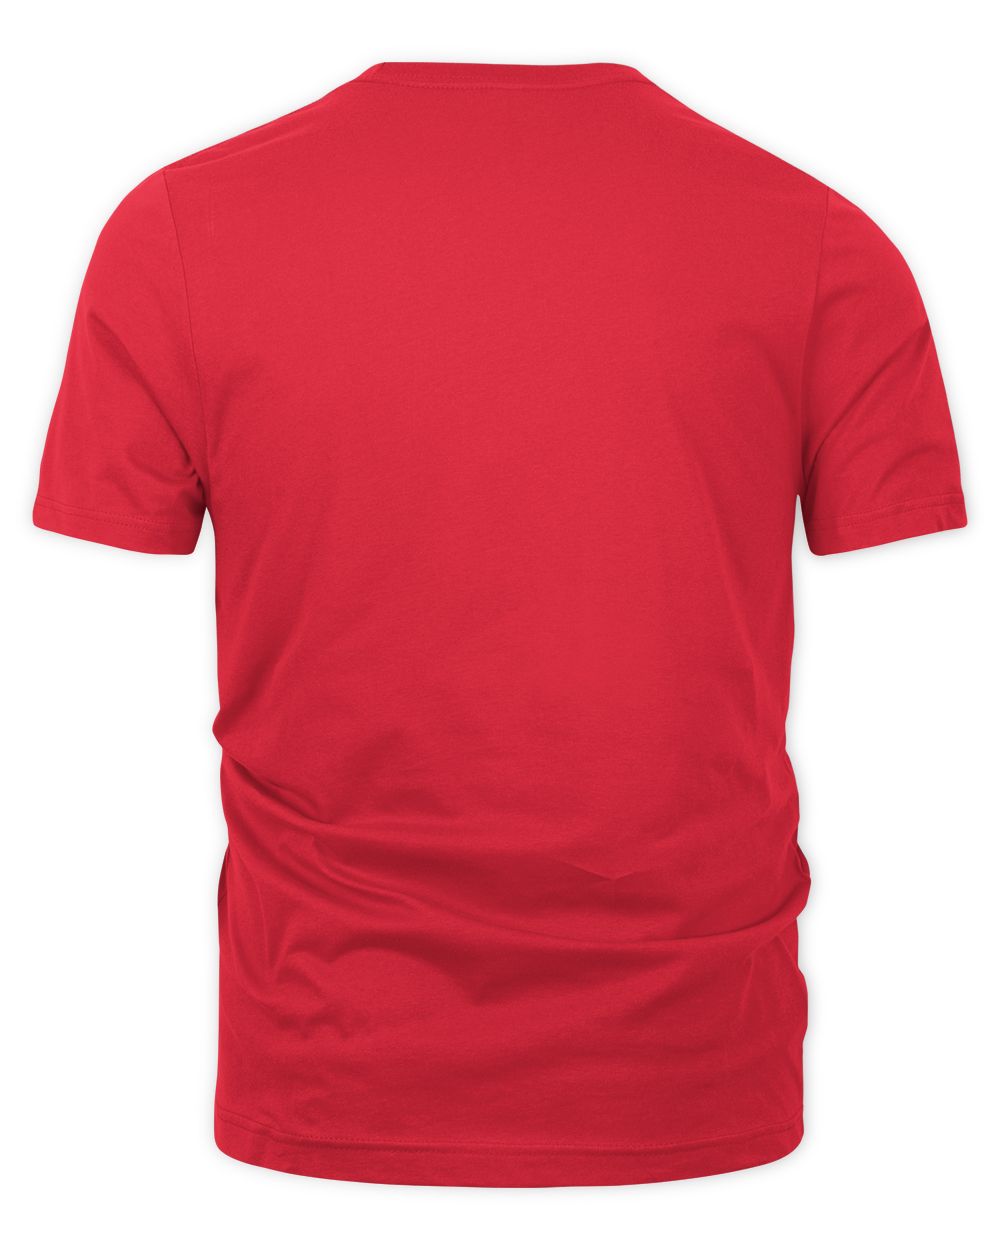 Slipknot Merch Crypto Star Shirt Unisex Premium T-Shirt red 